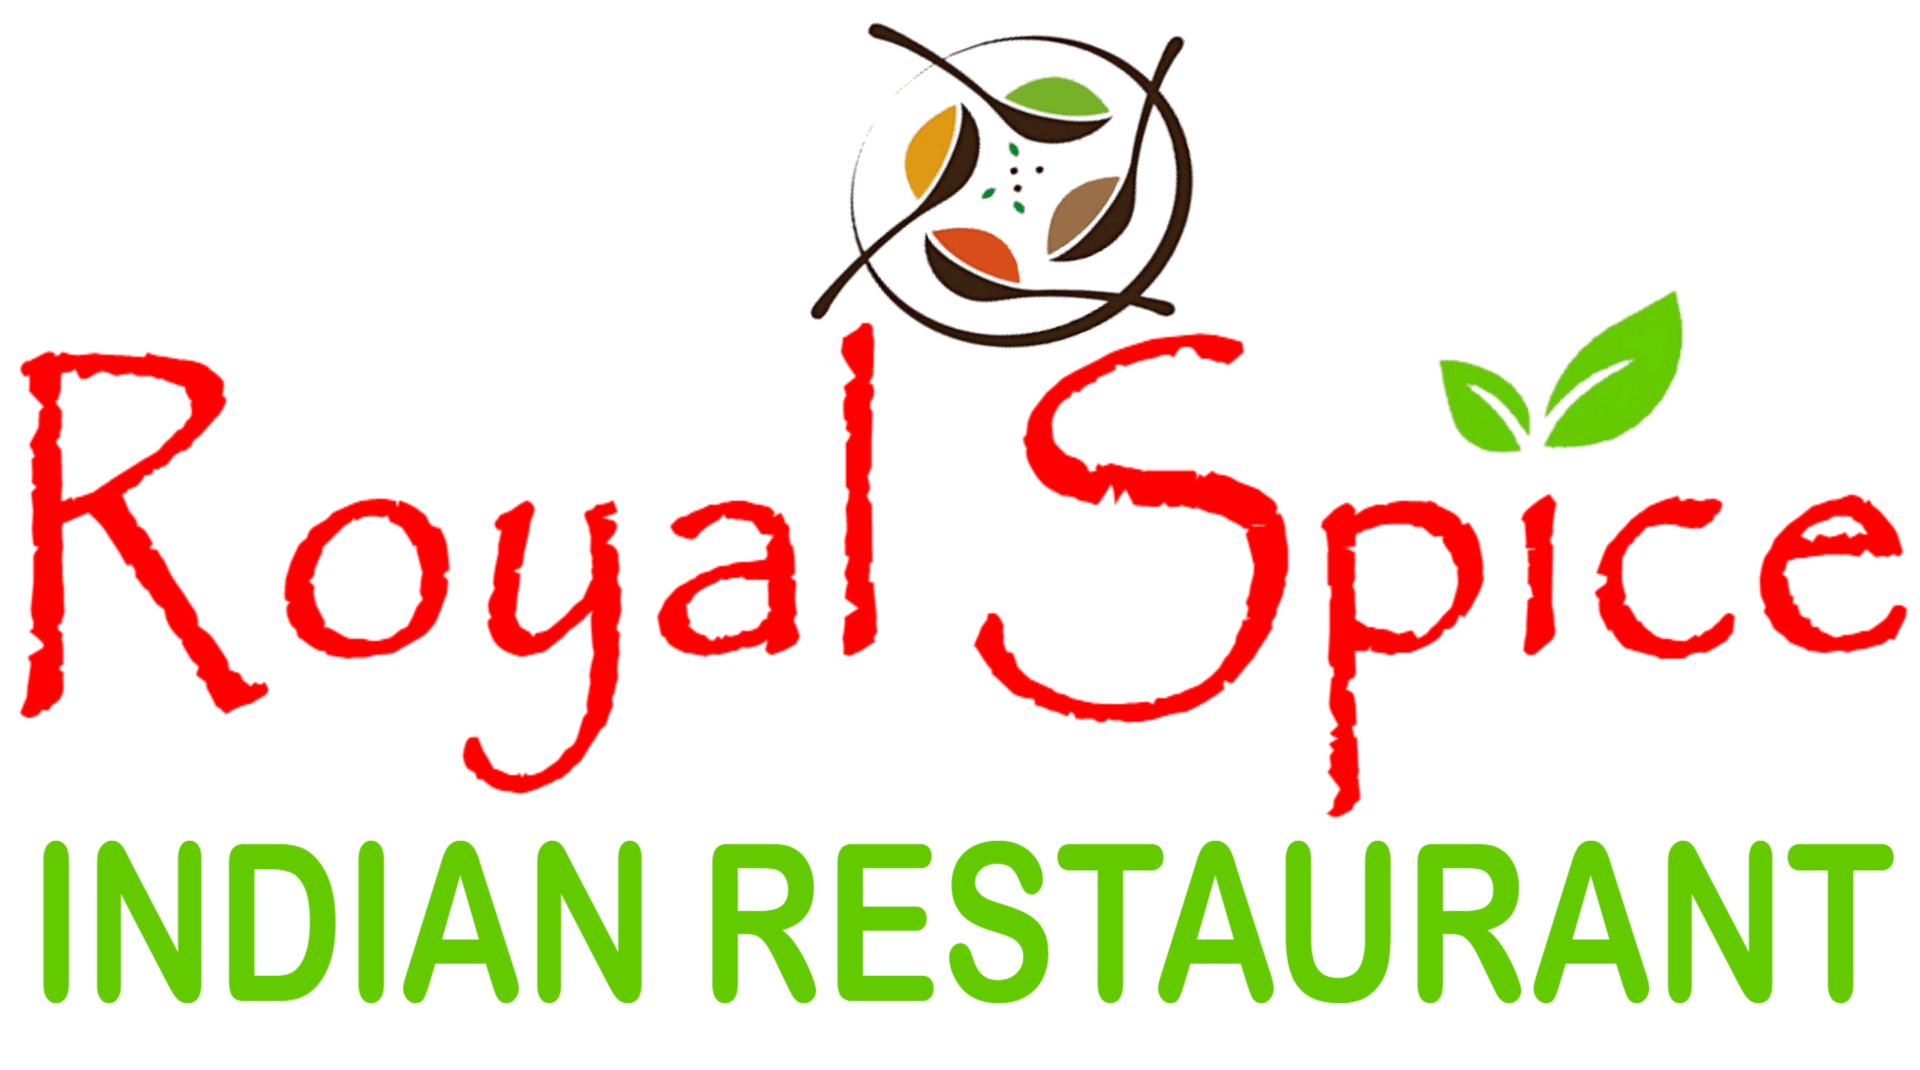 Royal Spice Indian Restaurant